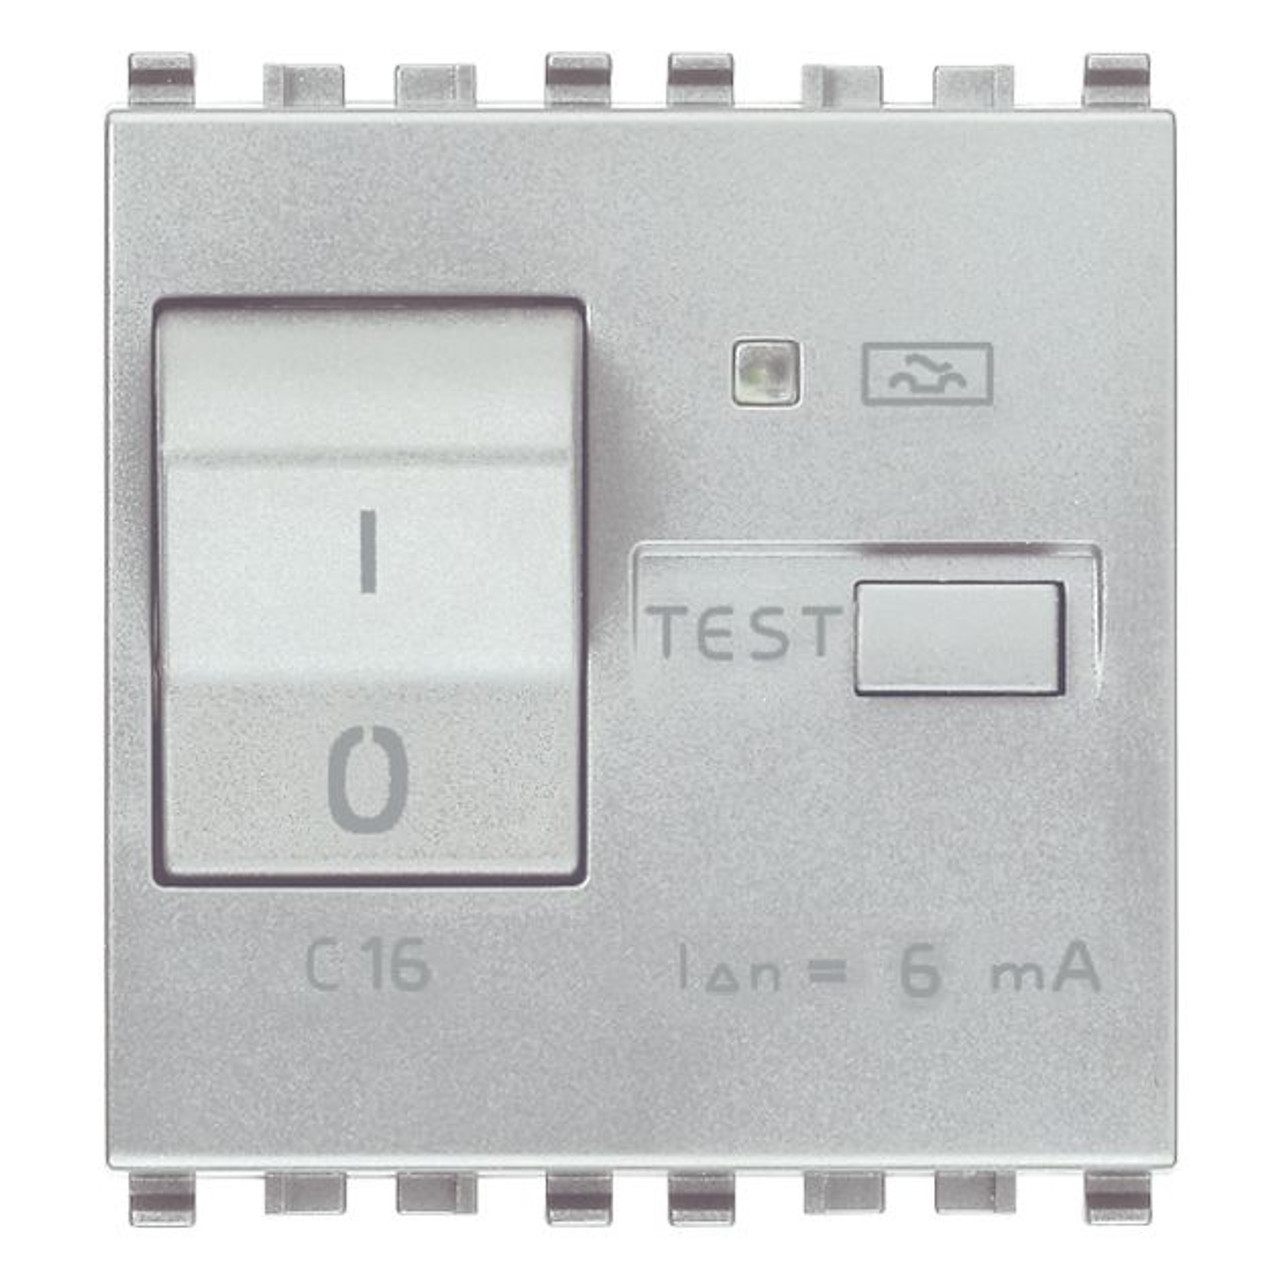 Vimar - Eikon 20411.16 RCBO Circuit Breaker - 1P+N C16, 120/230V, 10 mA, IP40, 2 Module, 50-60 Hz - Apollo Lighting